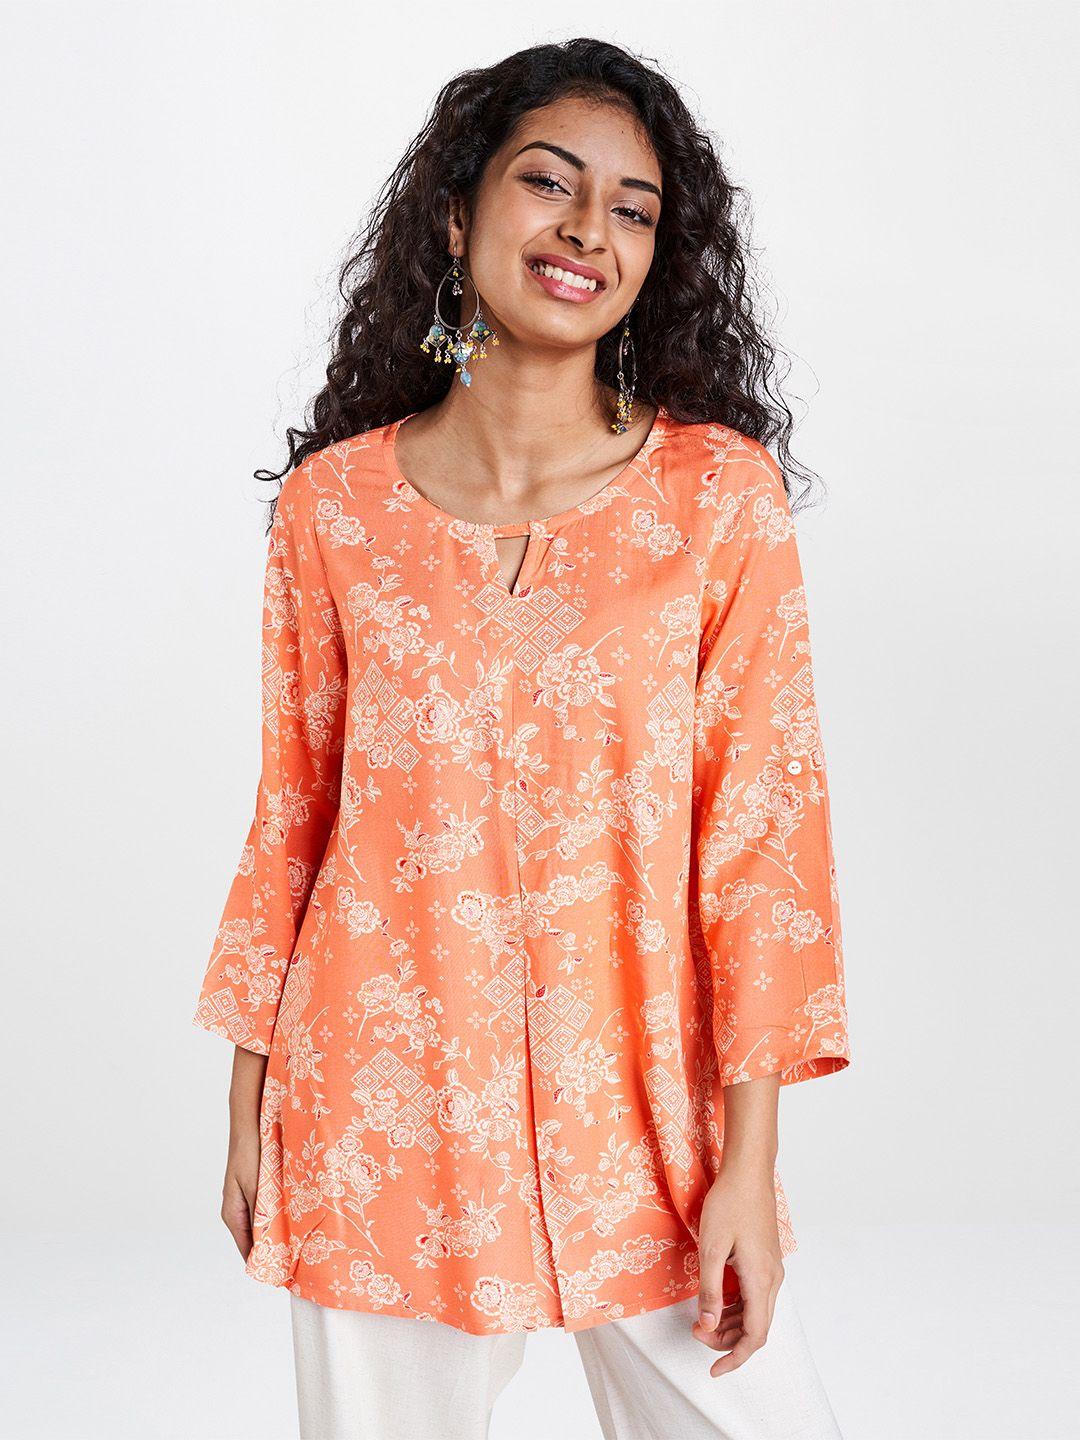 global-desi-women-coral-orange-&-white-ecovero-printed-a-line-top